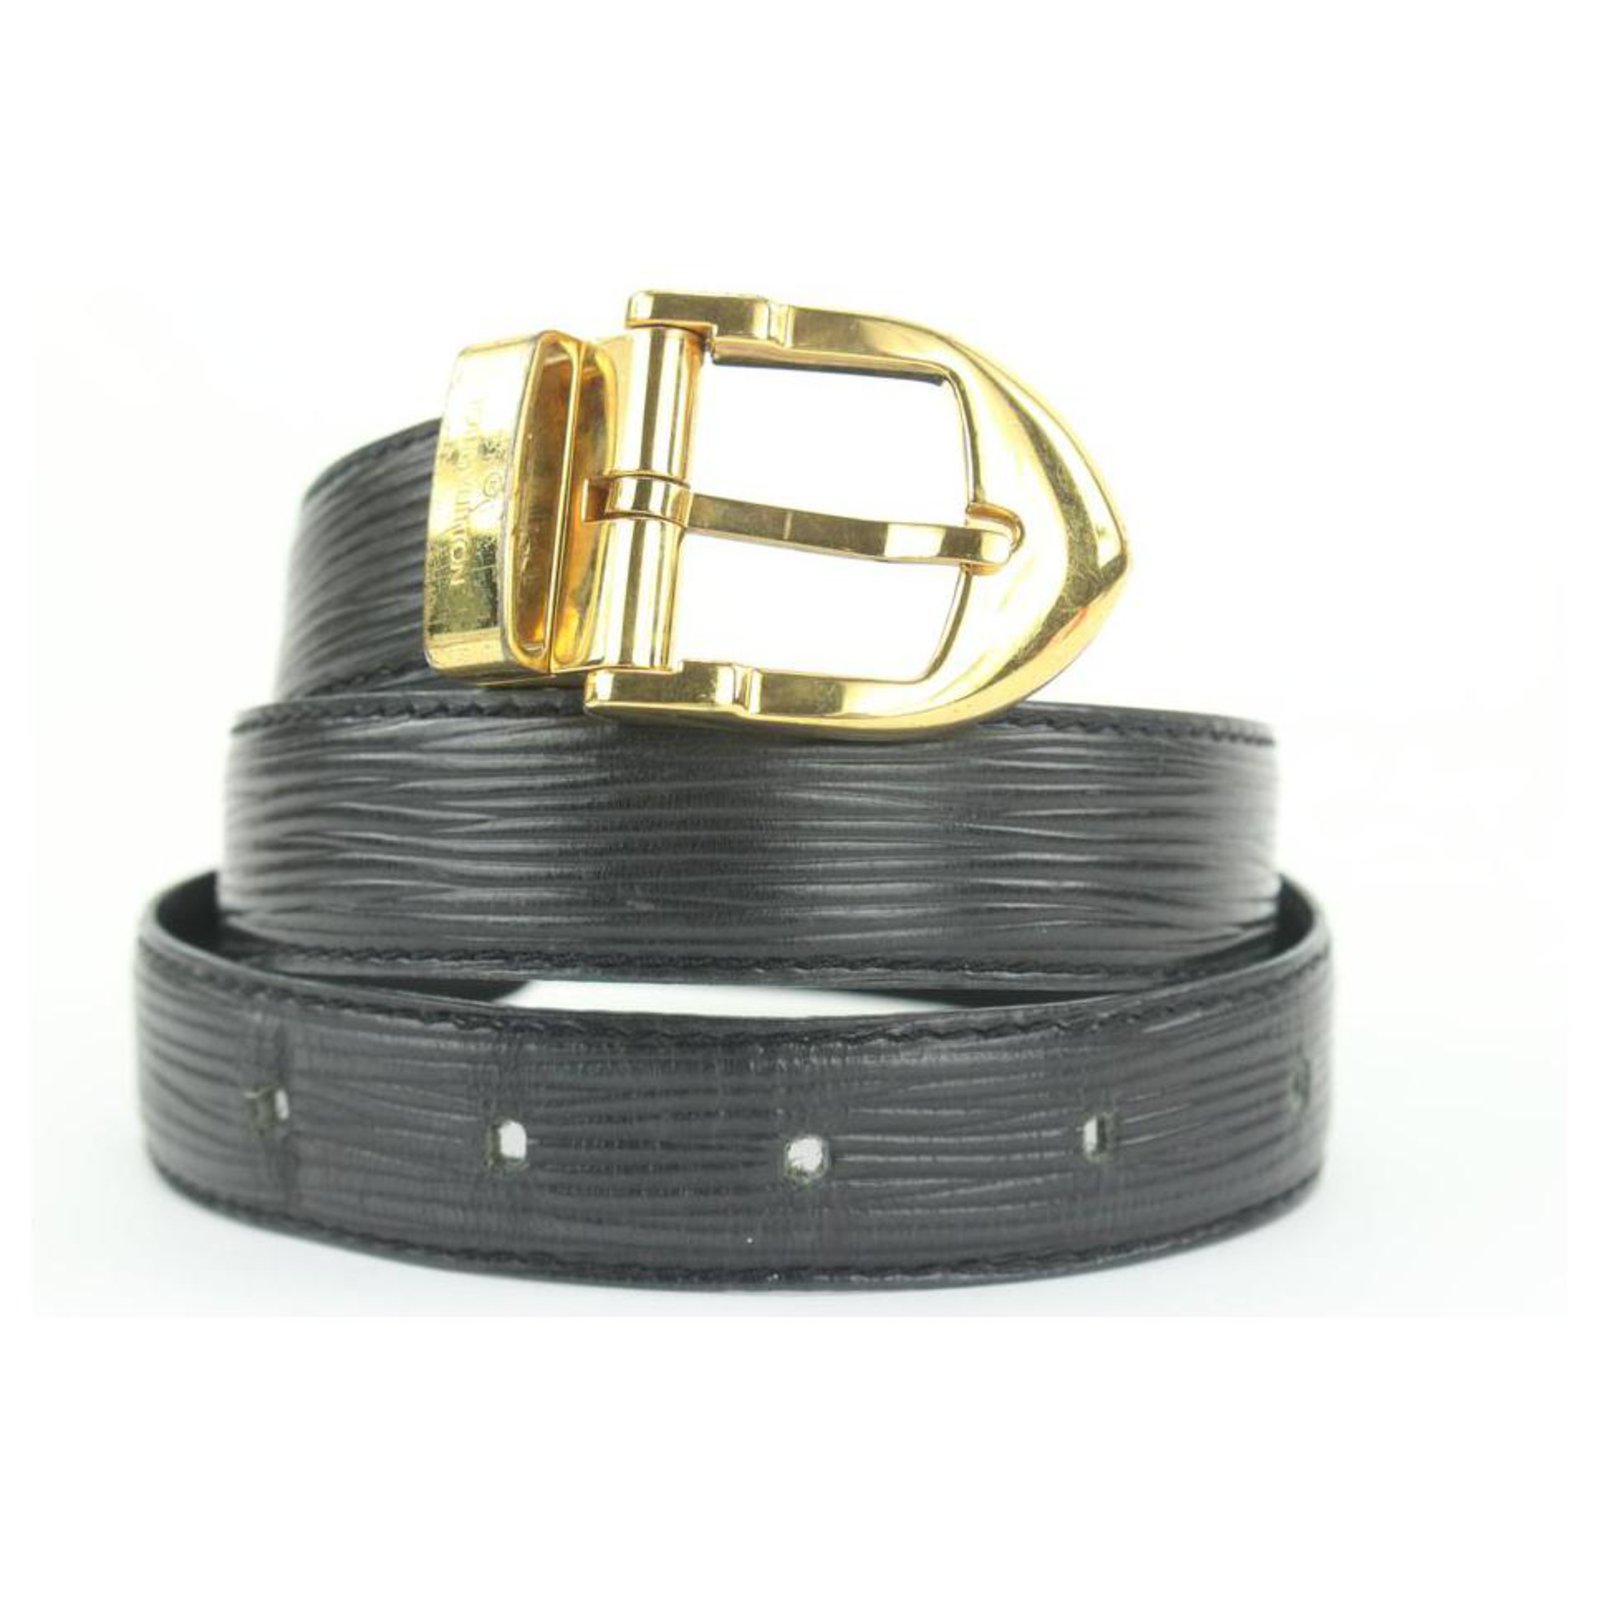 black louis vuitton belt with gold buckle